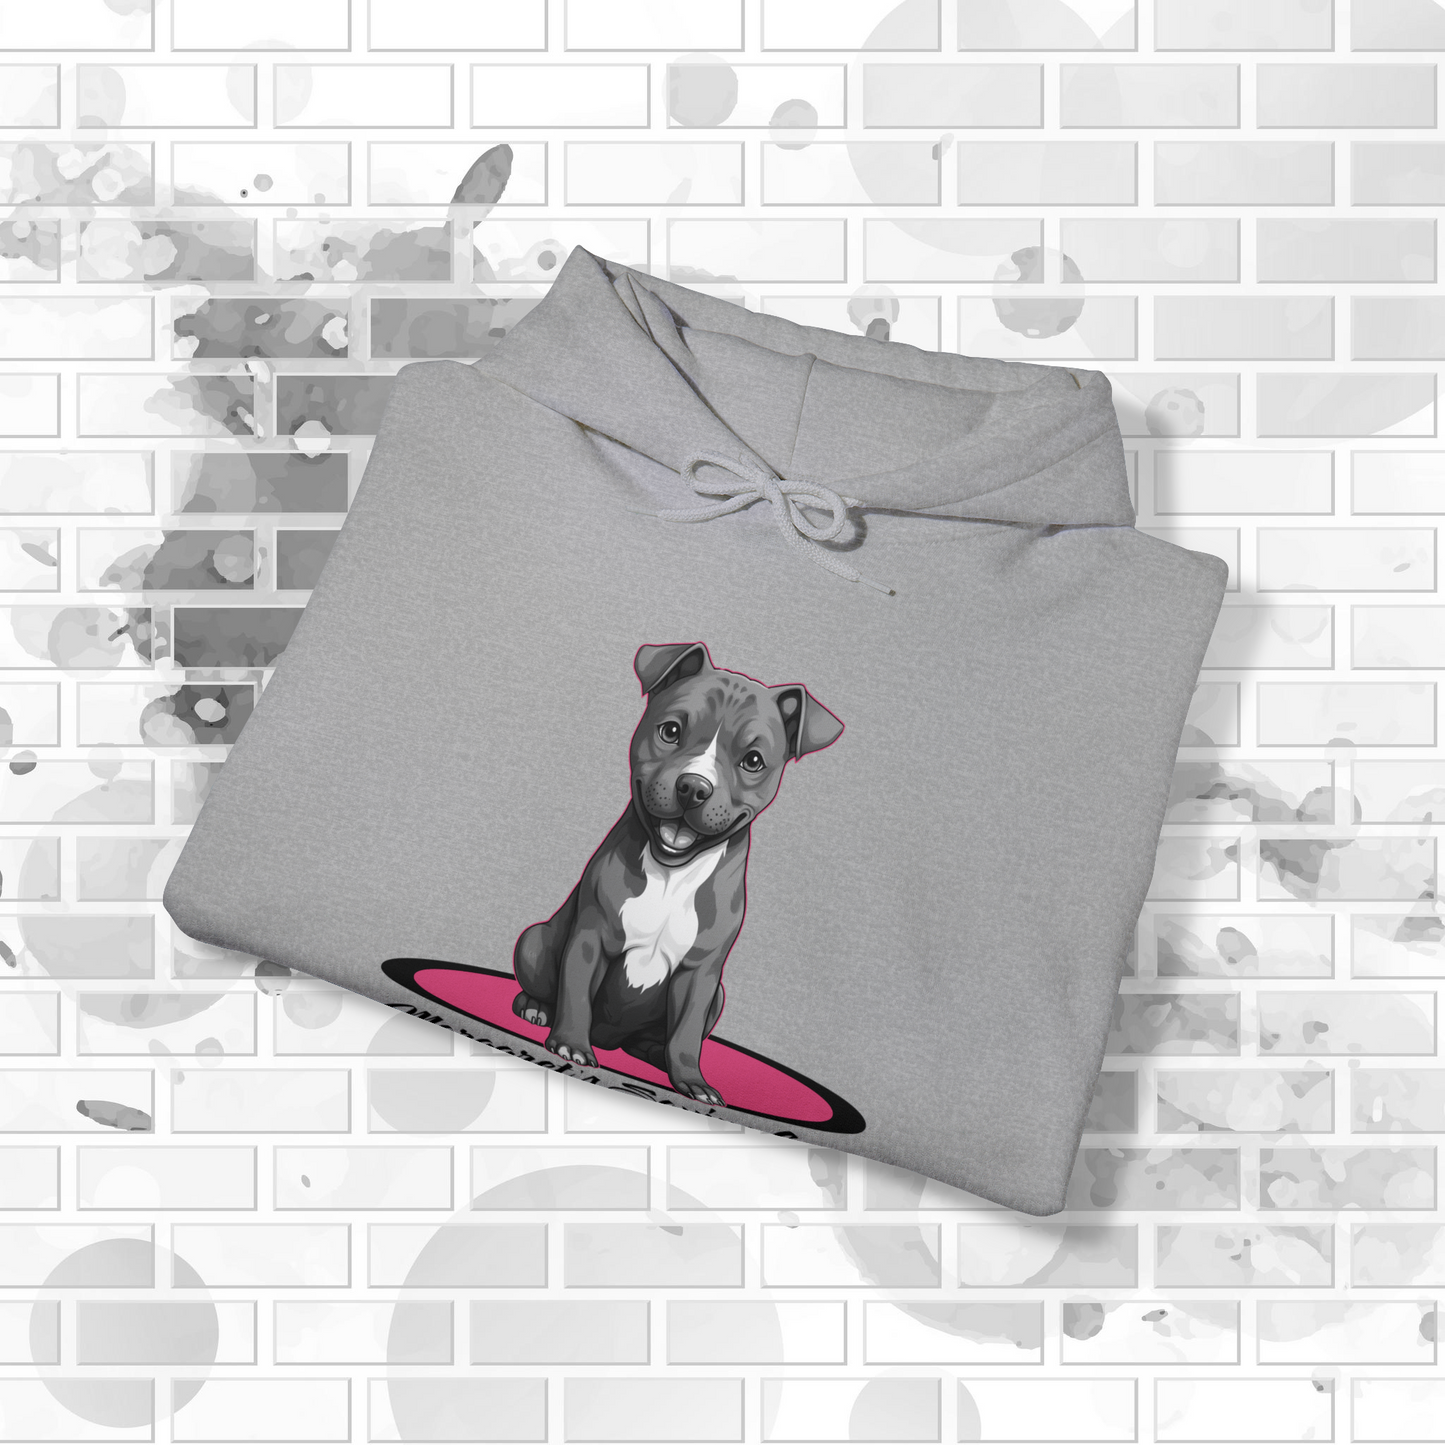 MSGBR Bully Rescue Pitbull Dog Breed Single Pup Logo Hoodie Sweatshirt - 2 Colors